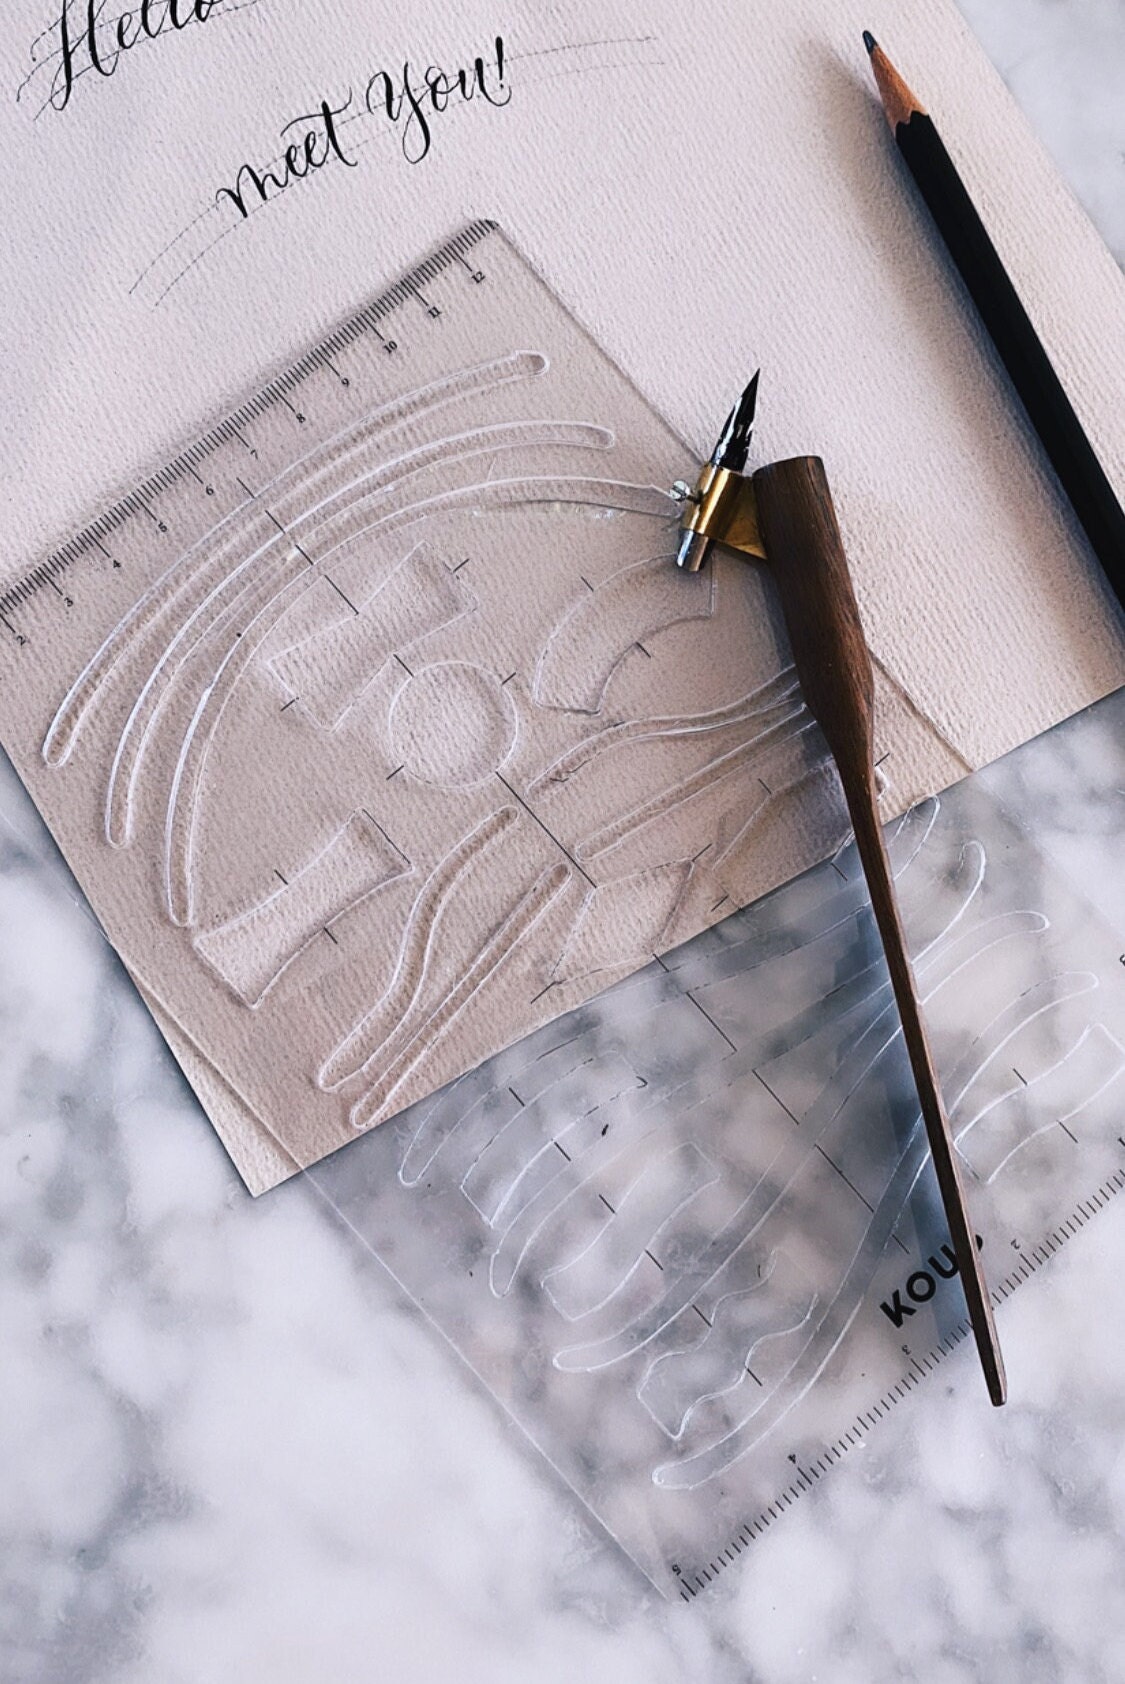 Aluminium Cutting Ruler (40cm)  Scribblers Calligraphy Supplies